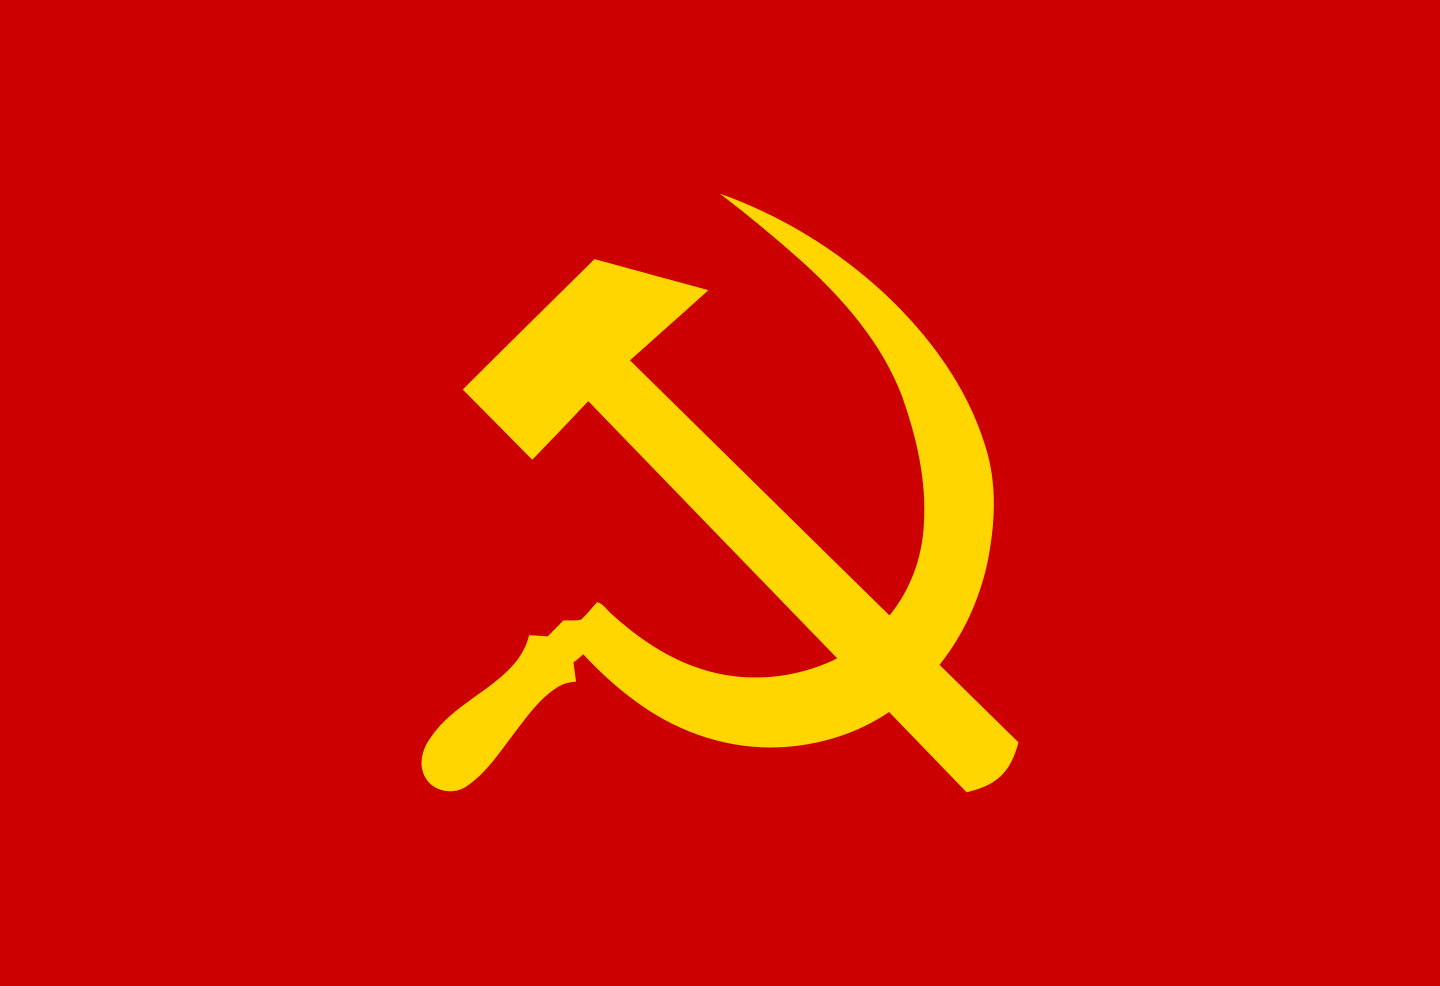 communism logo 2 - Communism Logo